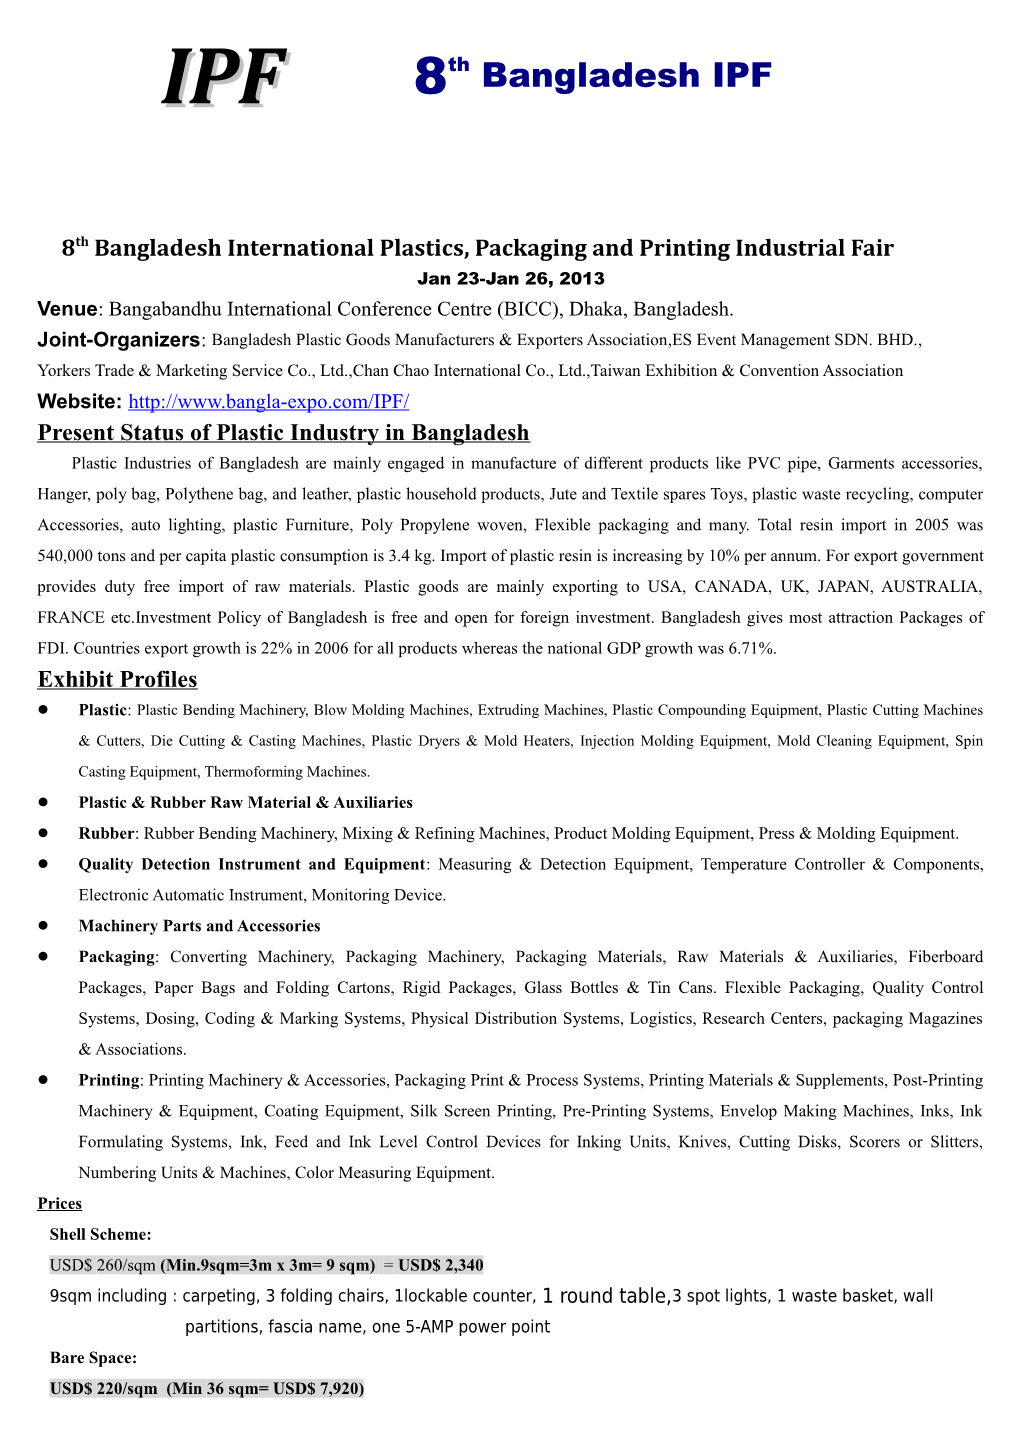 5Th Dhaka International Plastics, Packaging and Printing Industrial Fair